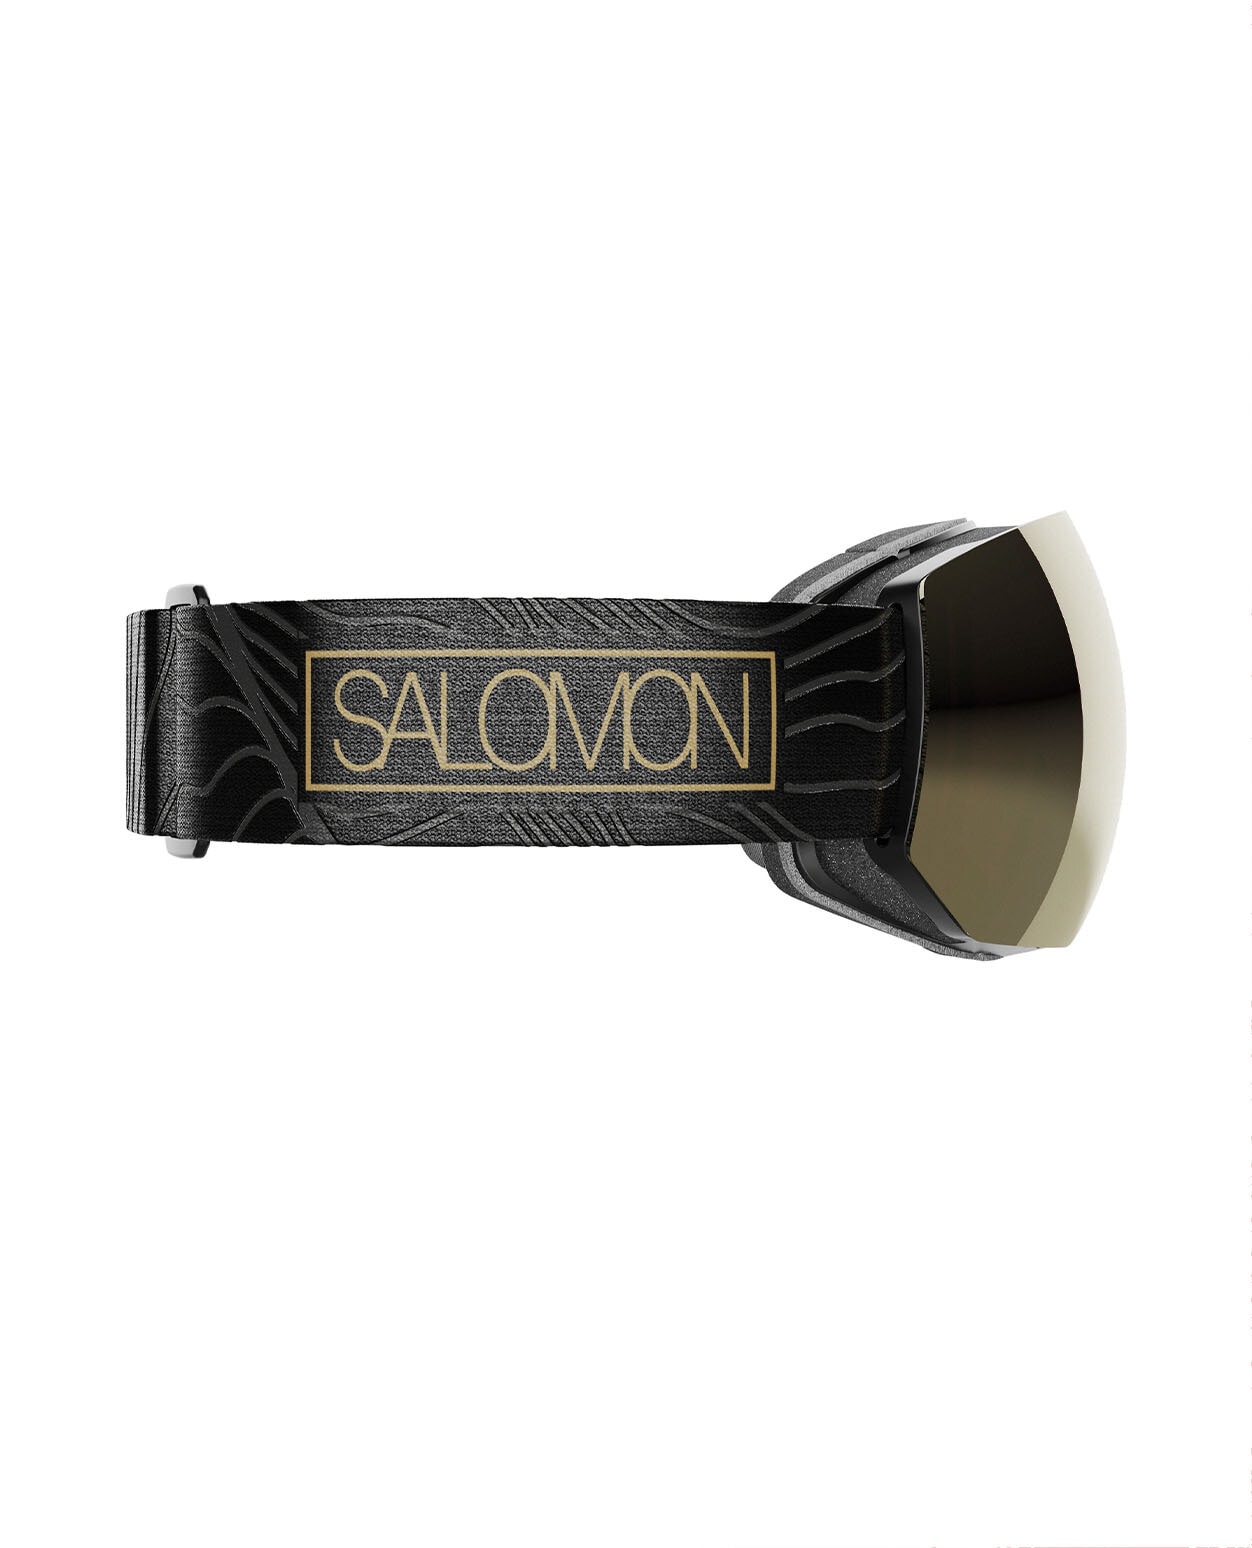 Salomon Radium Pro Sigma Black Montana/BG